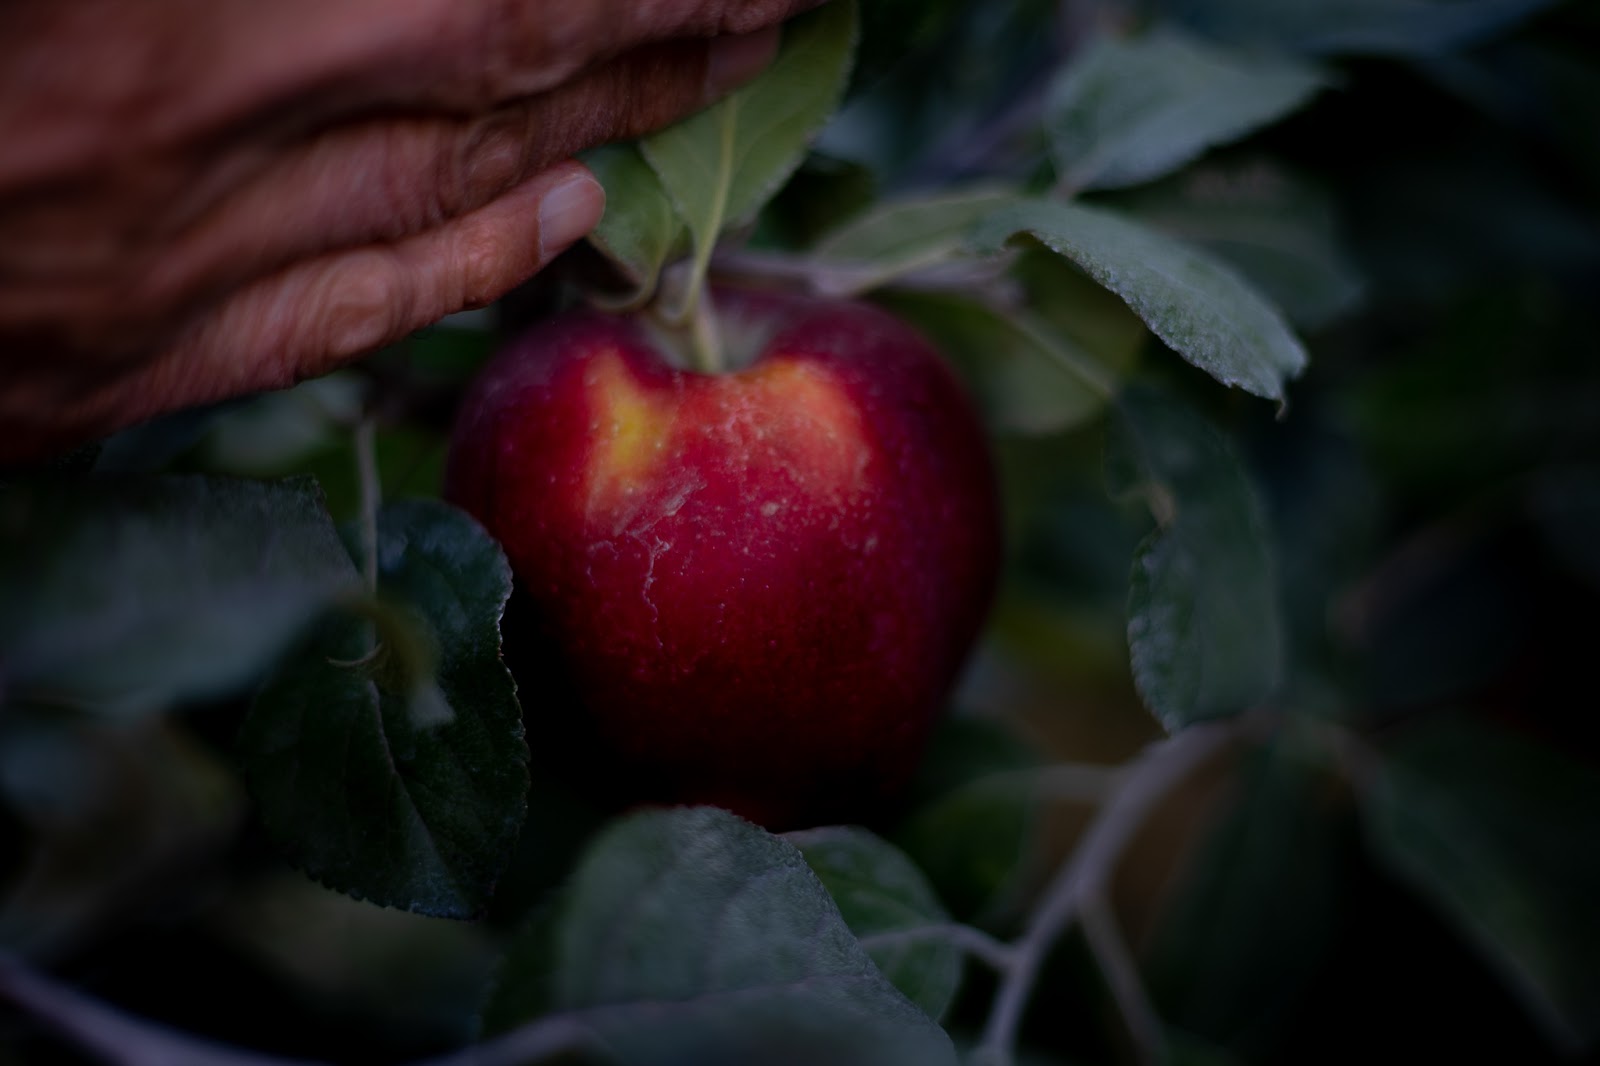 Washington Apple Growers Sink Their Teeth Into The New Cosmic